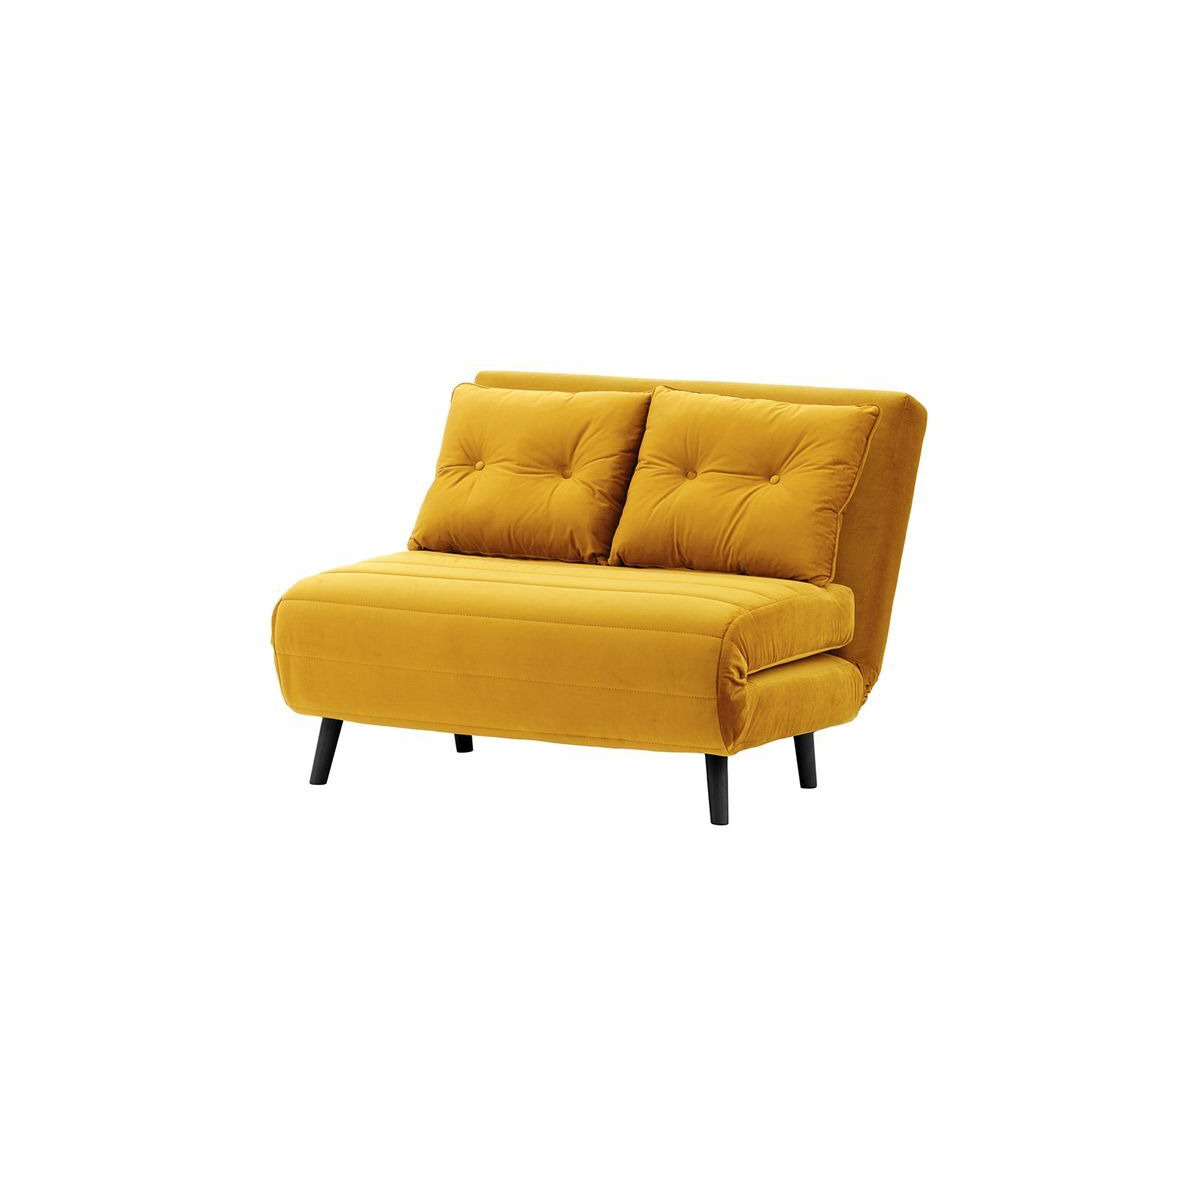 Flic Small Sofa Bed - width 103 cm, light grey, Leg colour: aveo - image 1